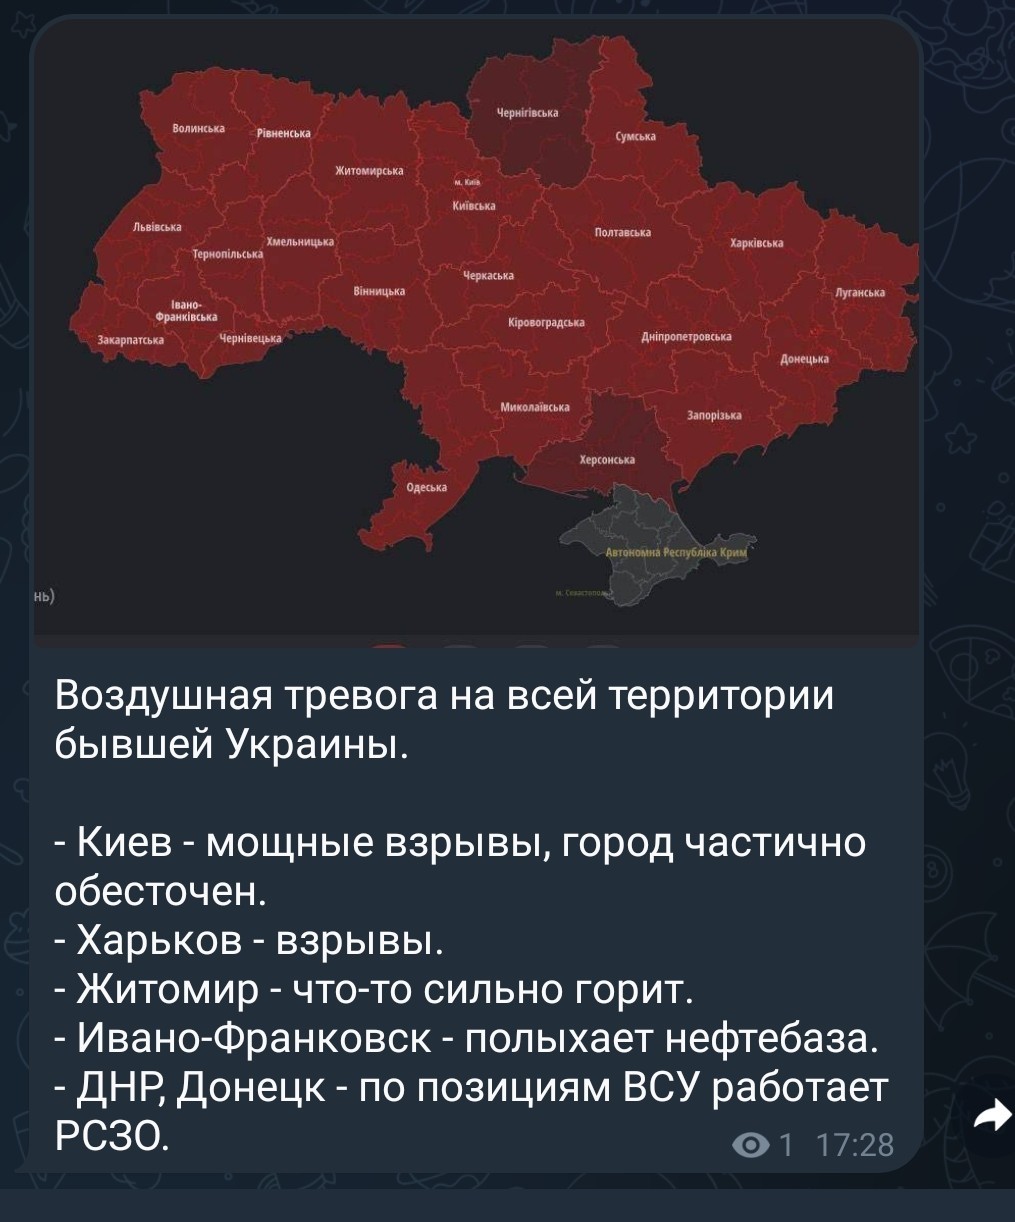 Украина сейчас тревога воздушная телеграмм. Воздушная тревога на Украине. Воздушная тревога на всей территории Украины. По всей территории Украины объявлена воздушная тревога. Карта воздушных тревог в Украине.